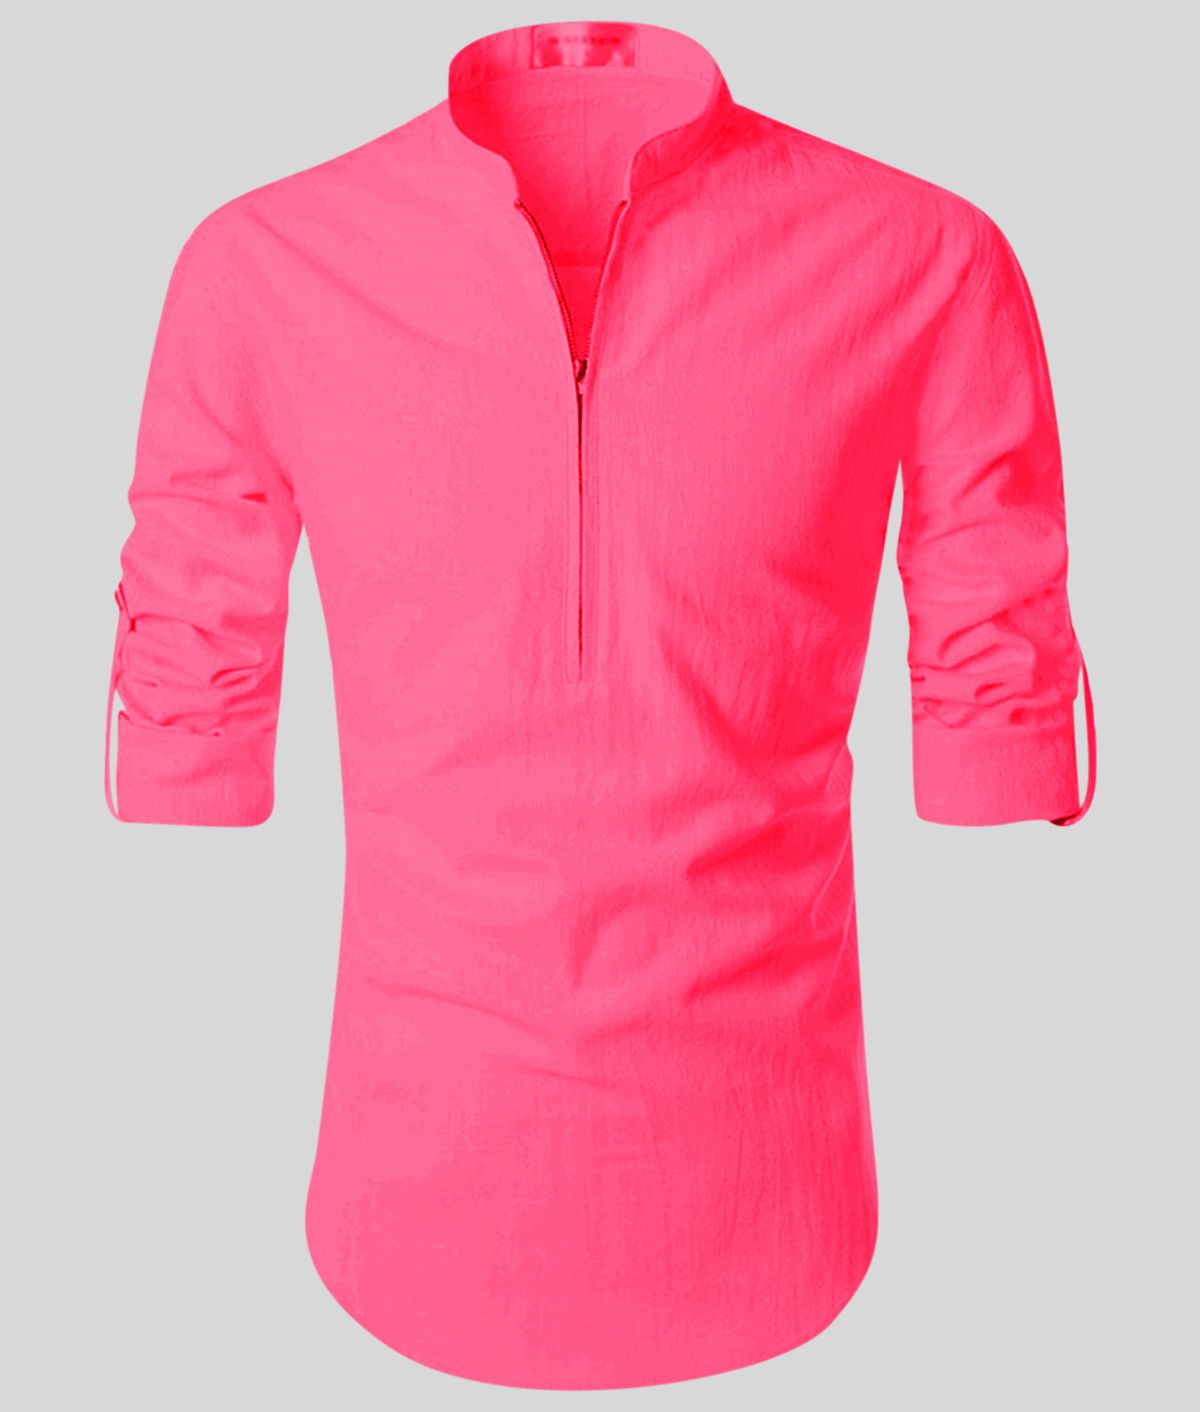     			Vida Loca - Pink Linen Regular Fit Men's Casual Shirt (Pack of 1)